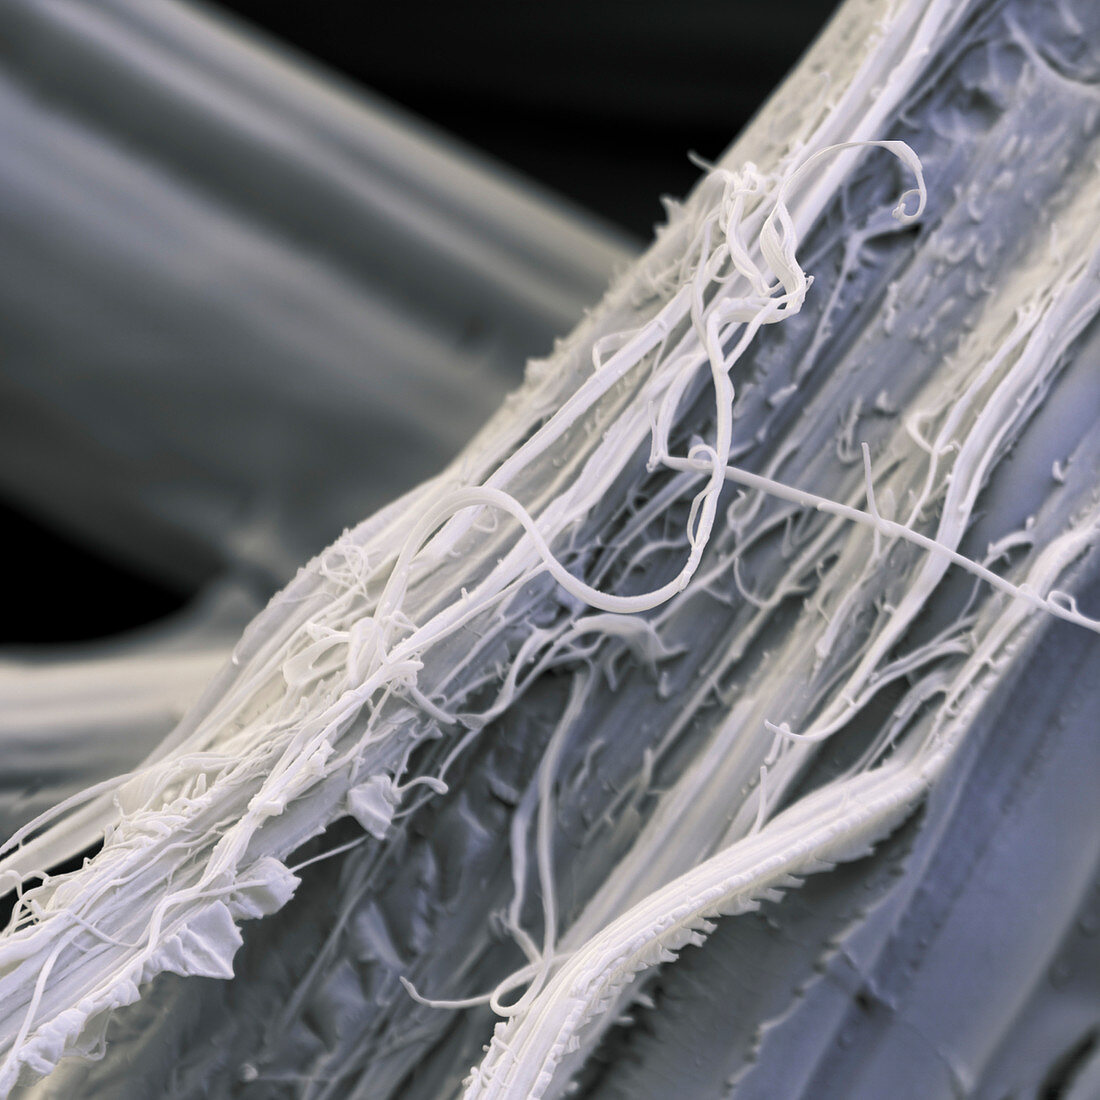 Silk fibres, SEM